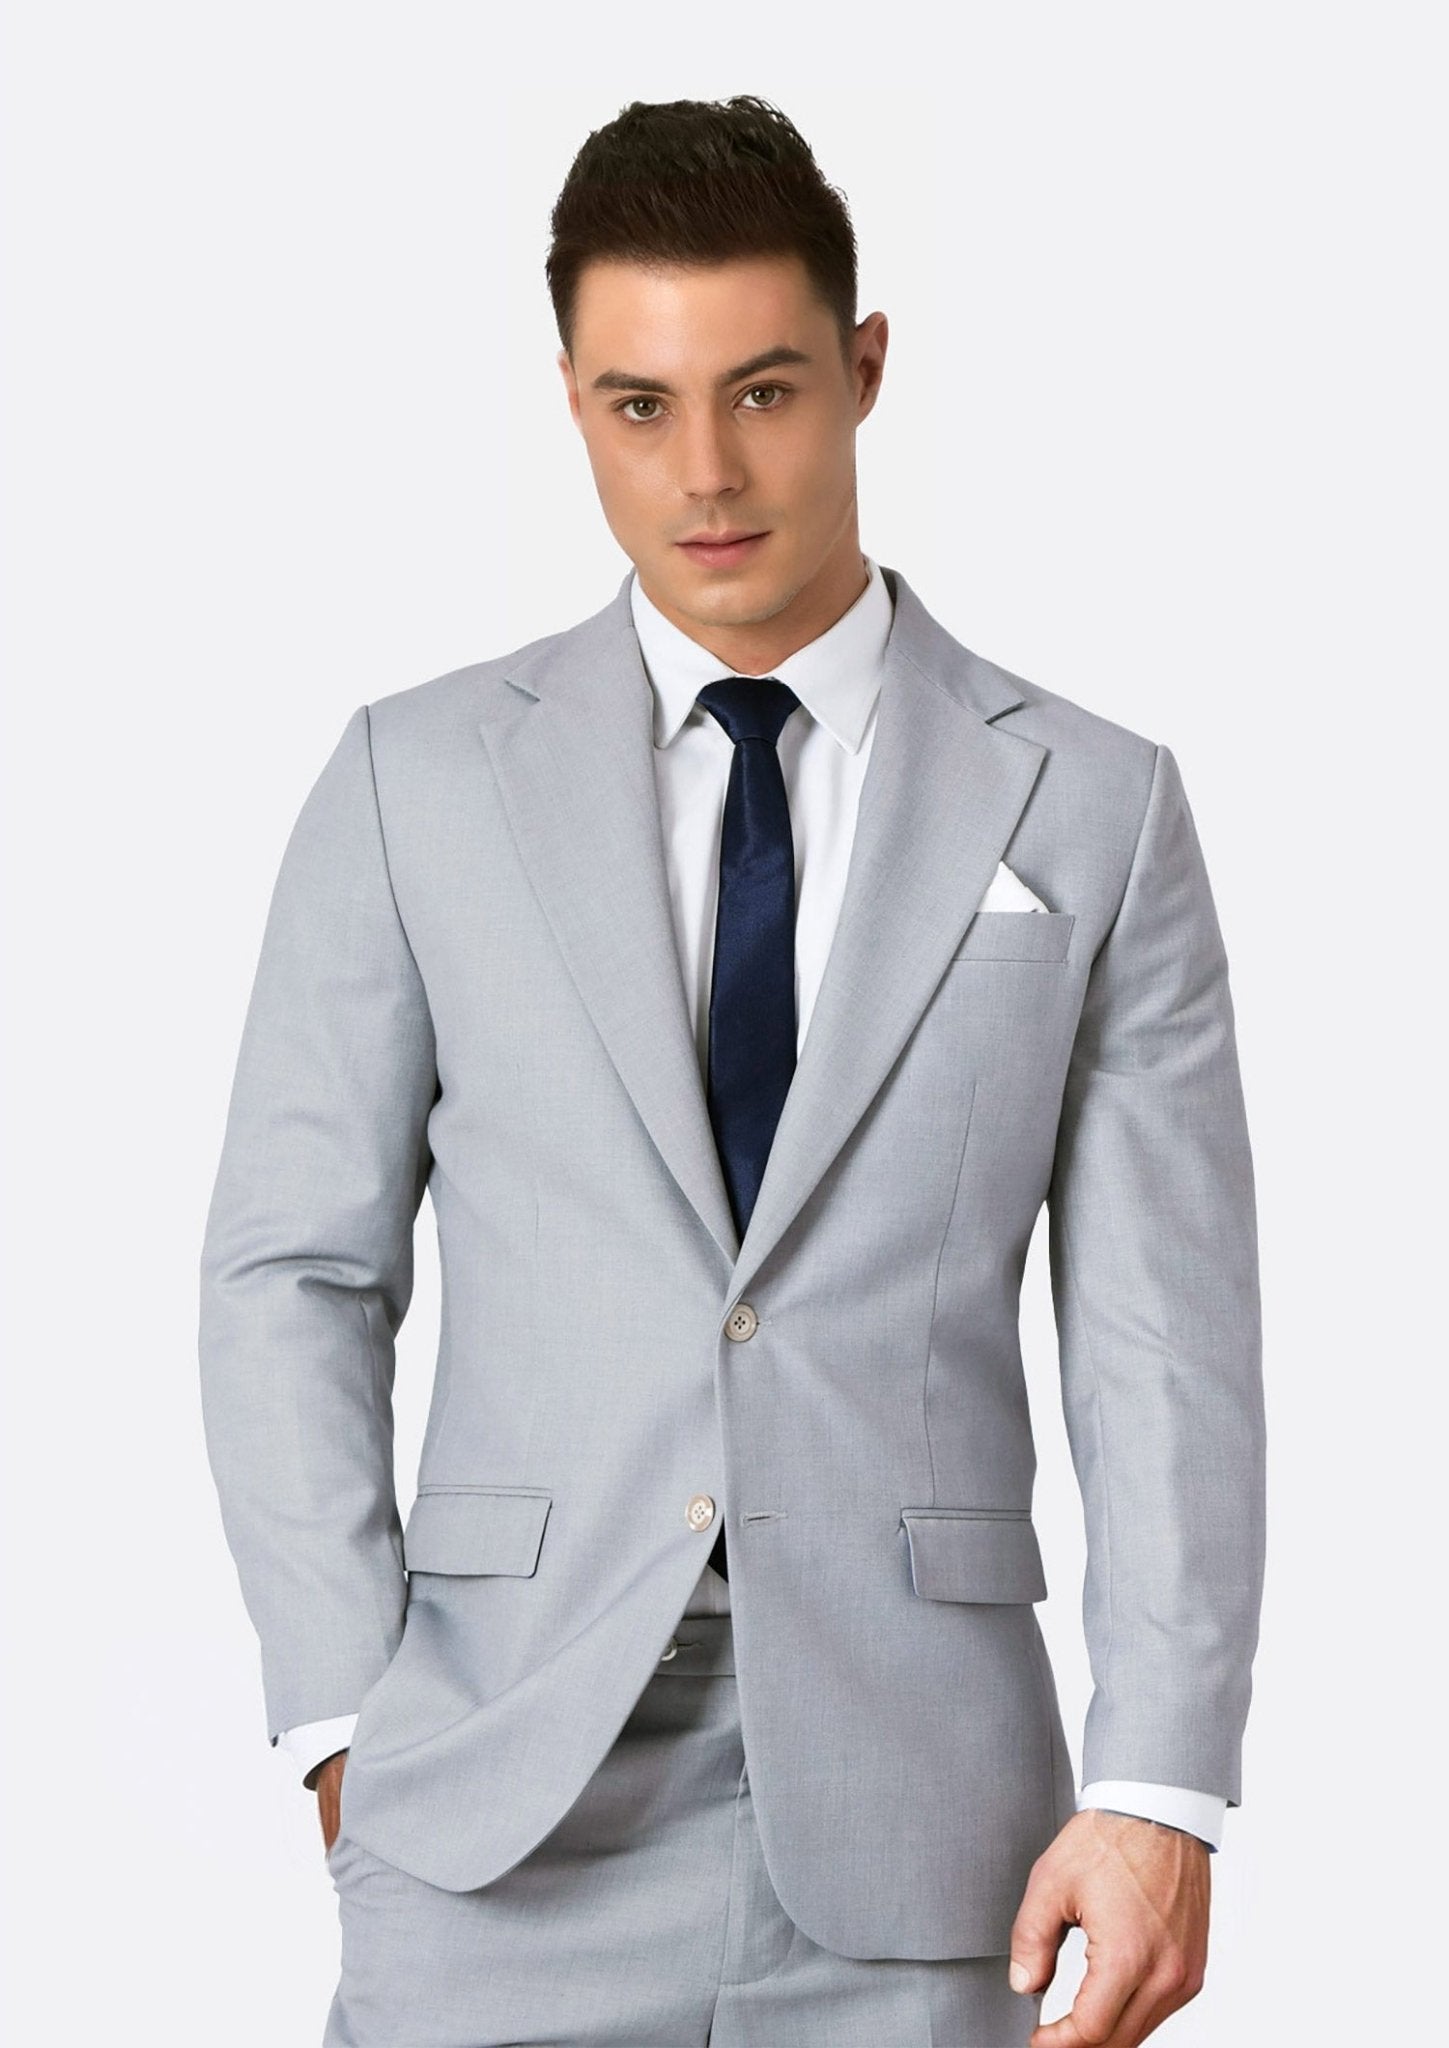 Powder Grey Twill Suit & Accessories Combo - Damon's Party - SARTORO